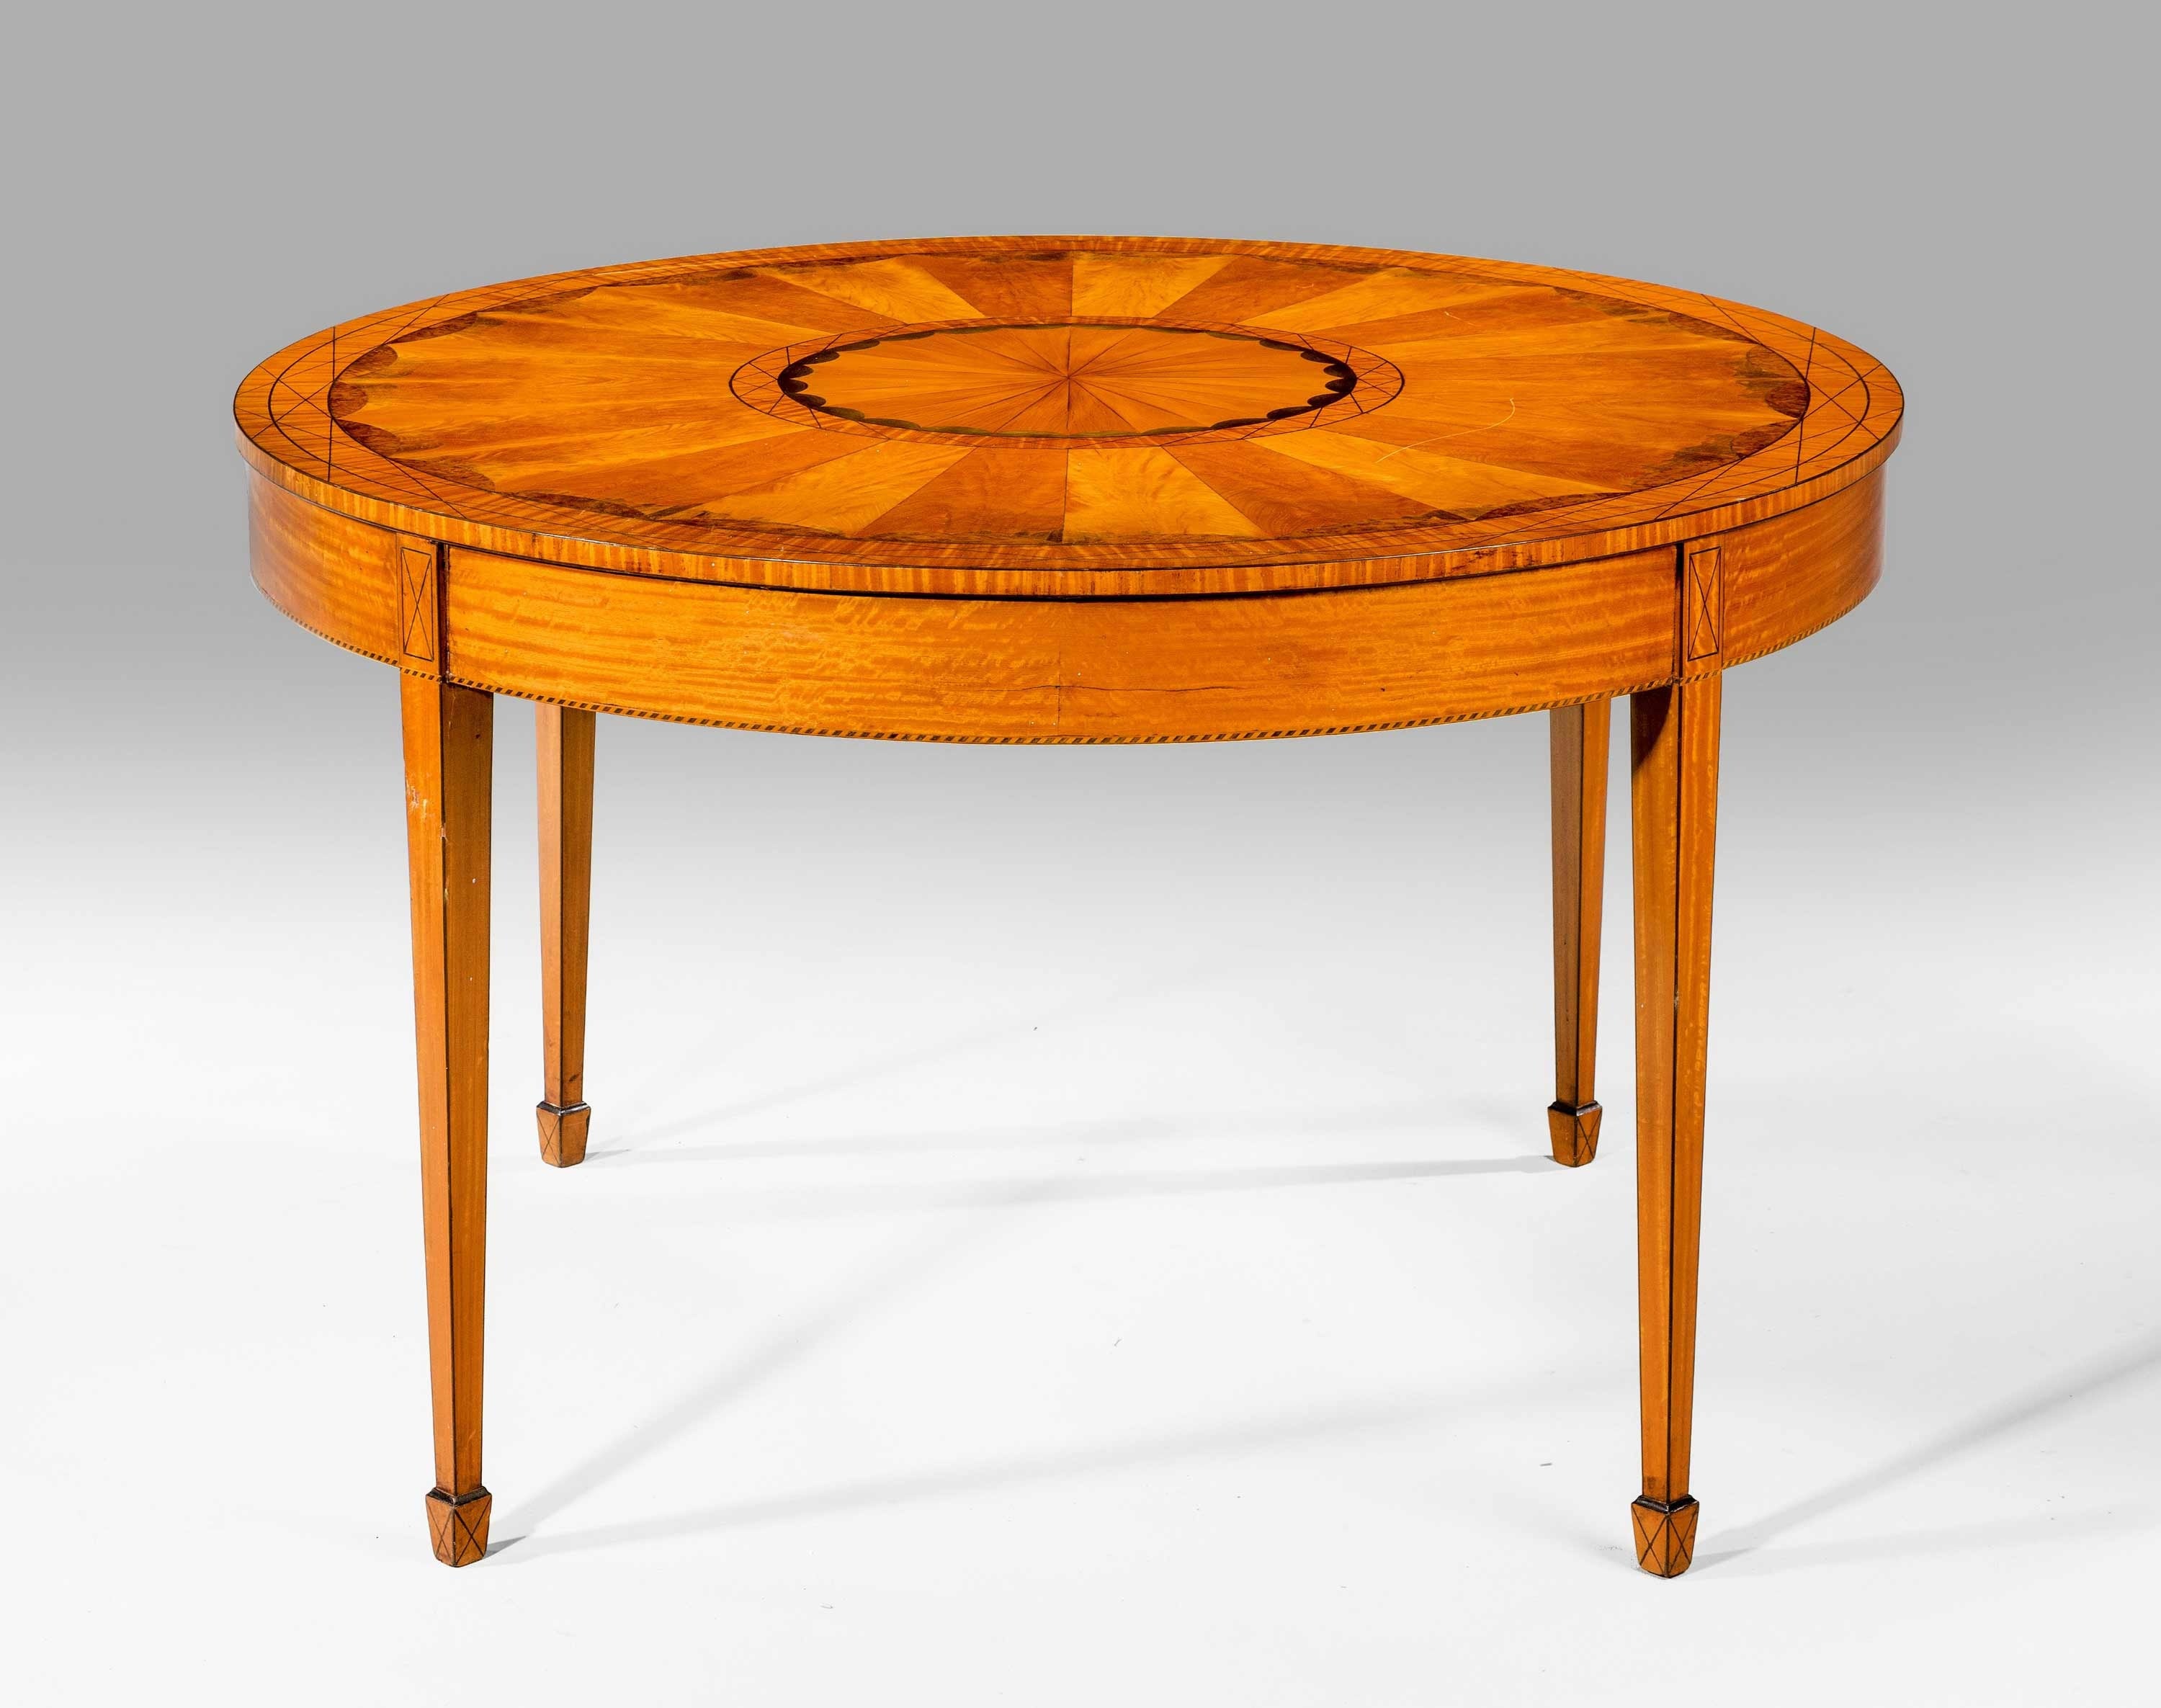 19th Century Satinwood Circular Centre Table